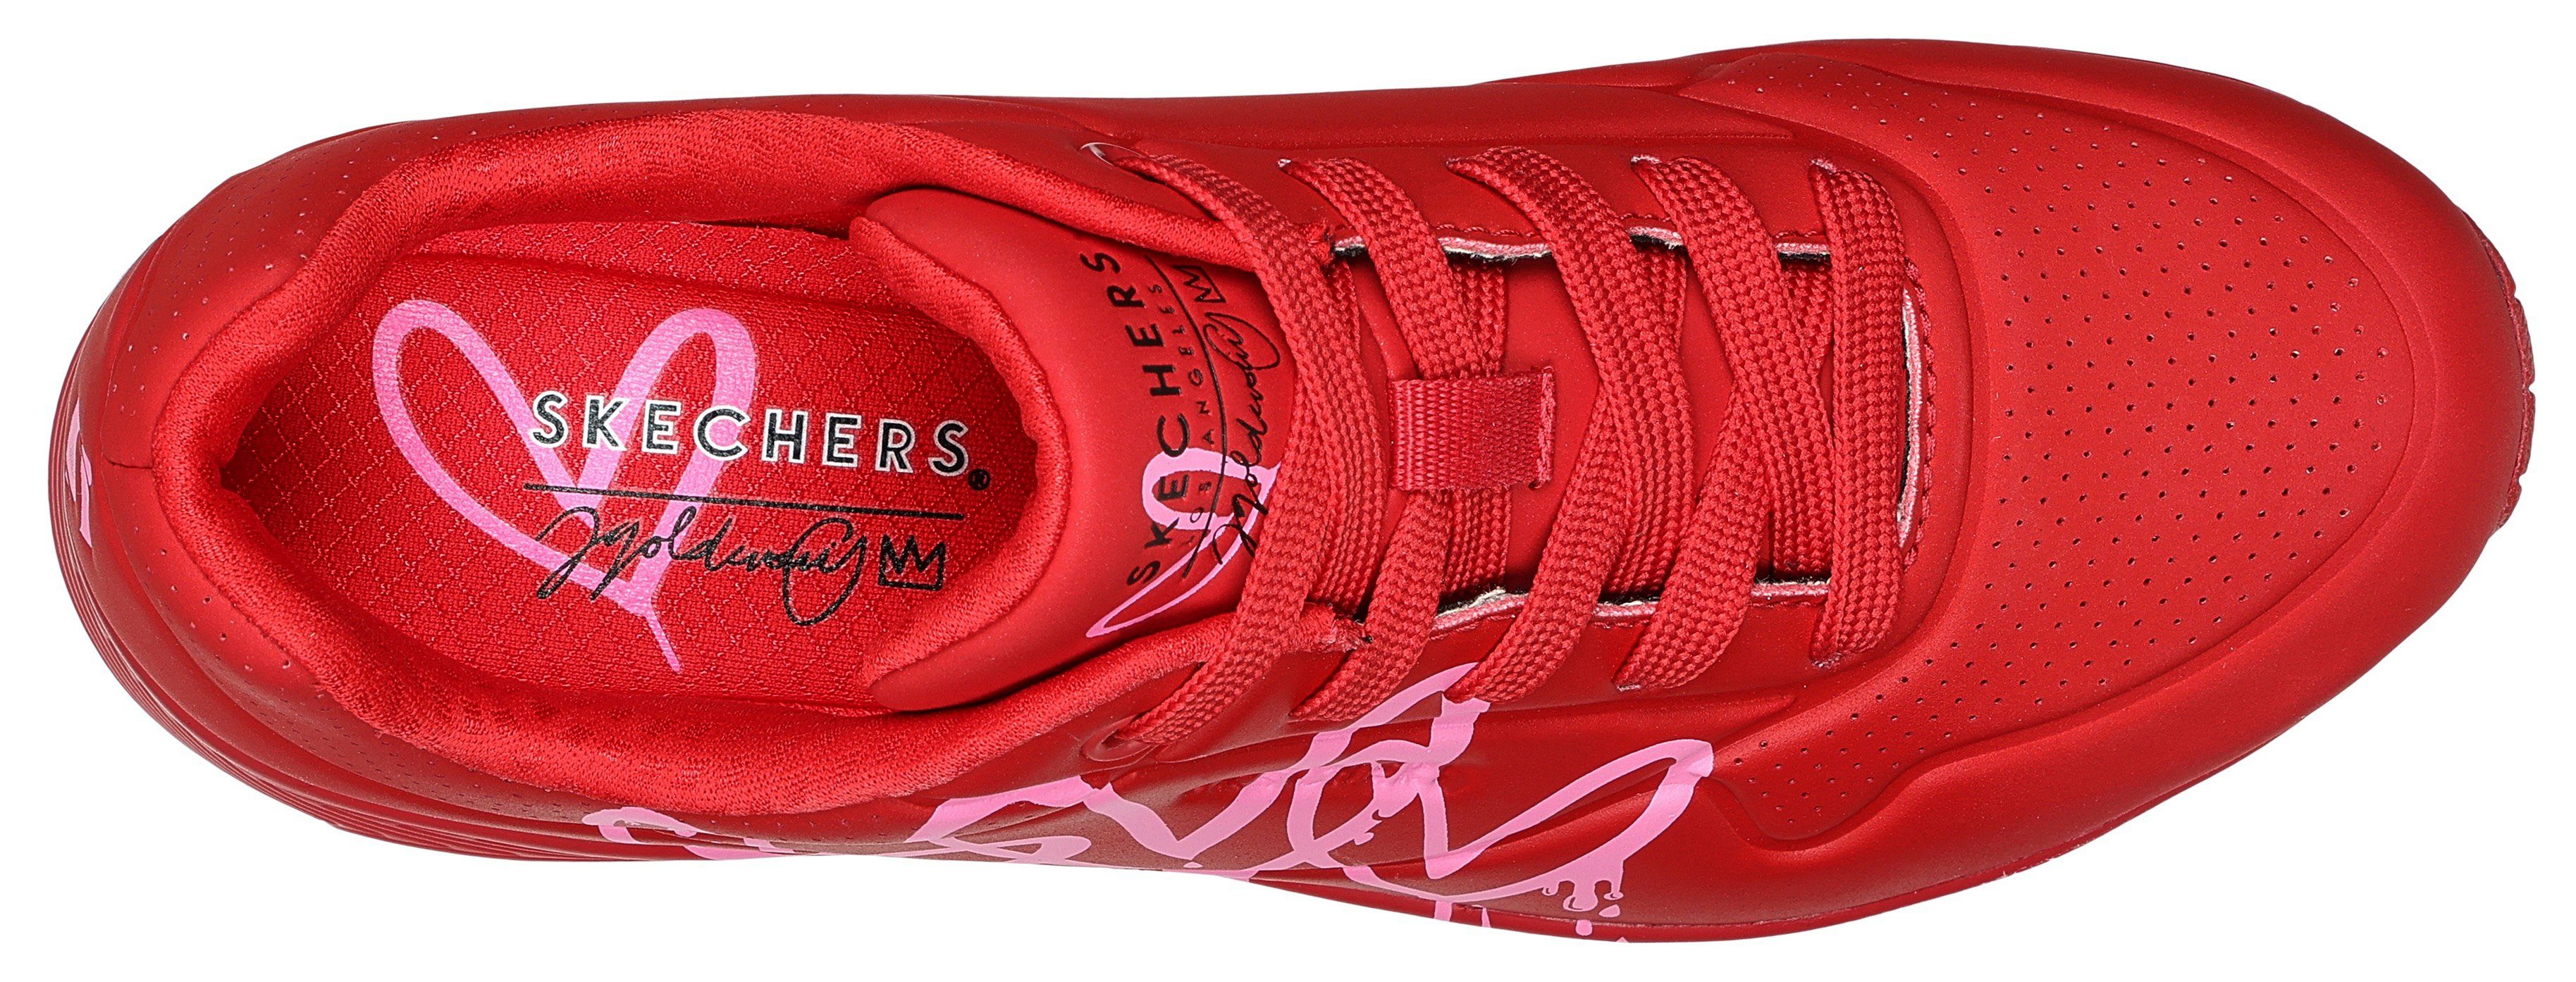 Skechers IN Herzen-Graffity-Print Sneaker UNO DRIPPING mit LOVE rot-pink